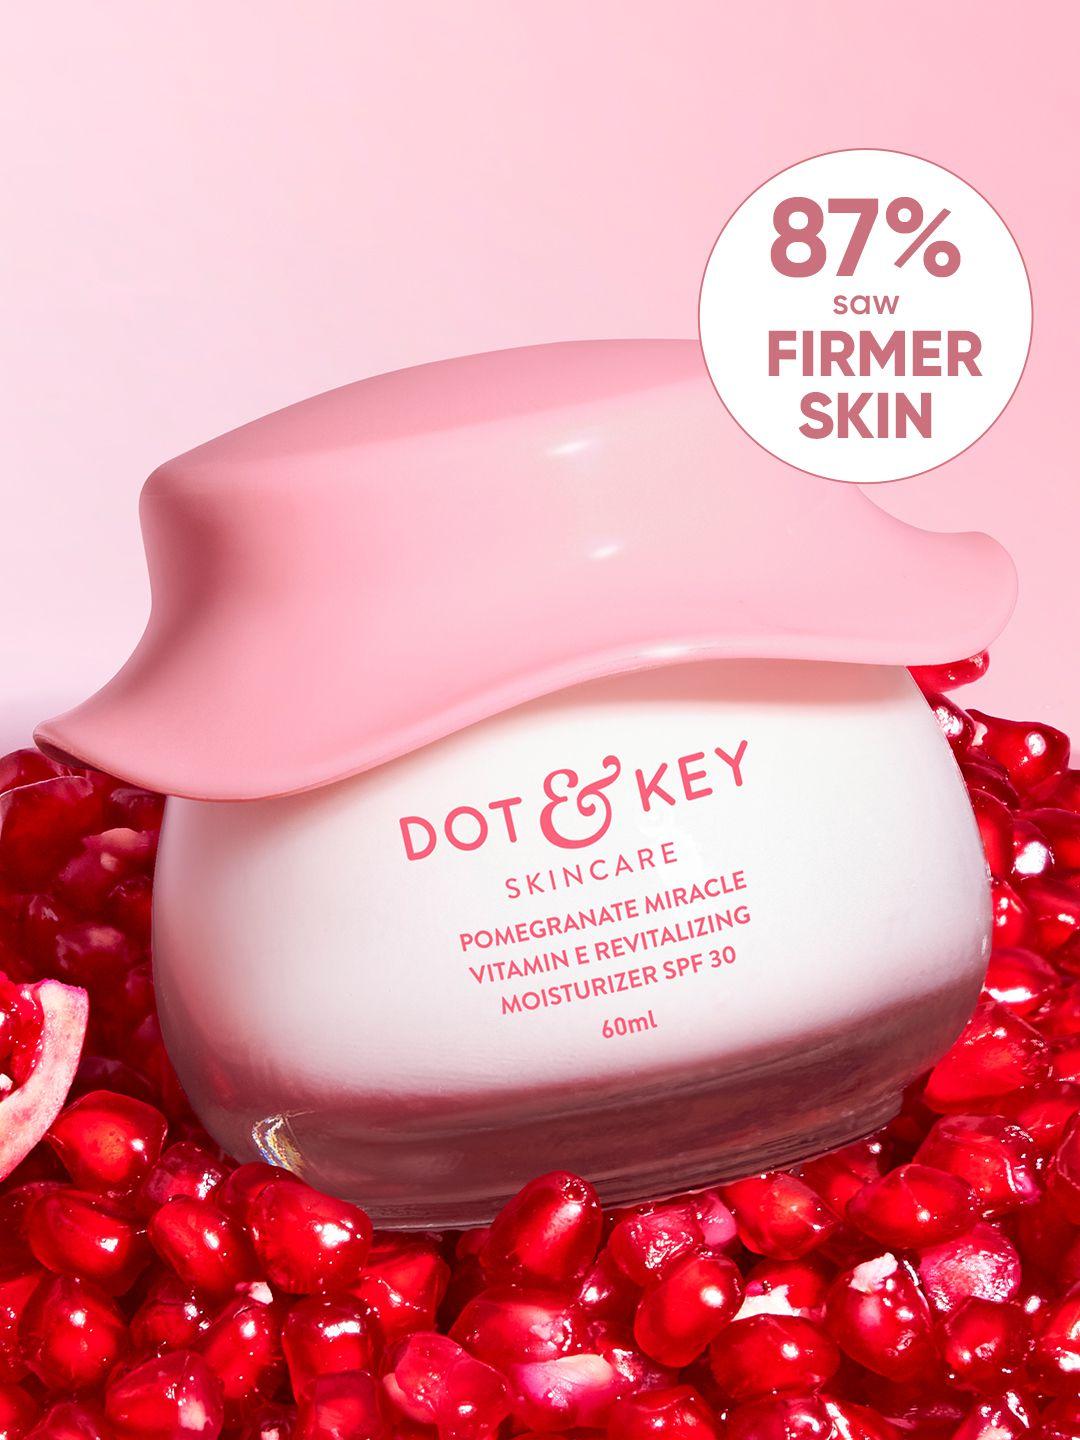 DOT & KEY Pomegranate Miracle Vitamin E Revitalizing Face Moisturizer SPF30 - 60ml